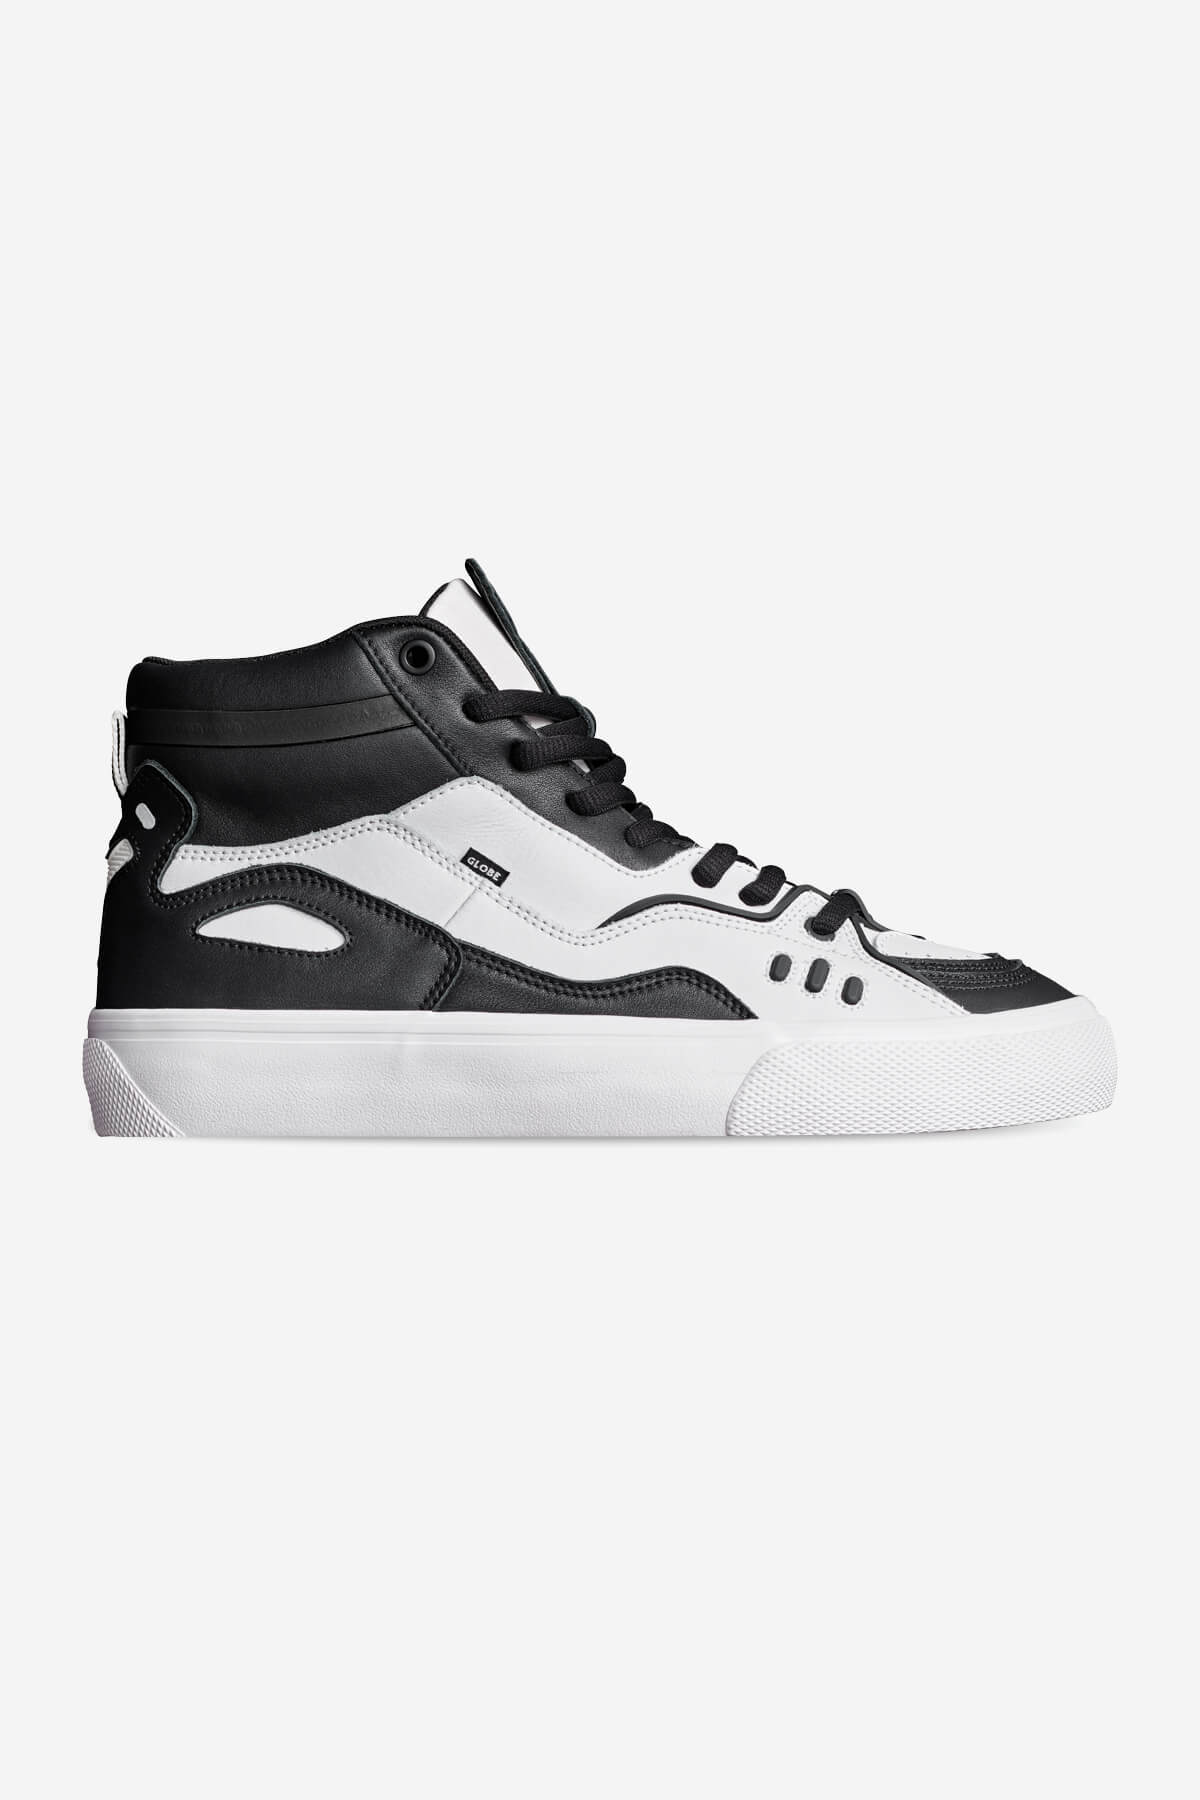 Globe - Dimension - Black/White - skateboard Zapatos